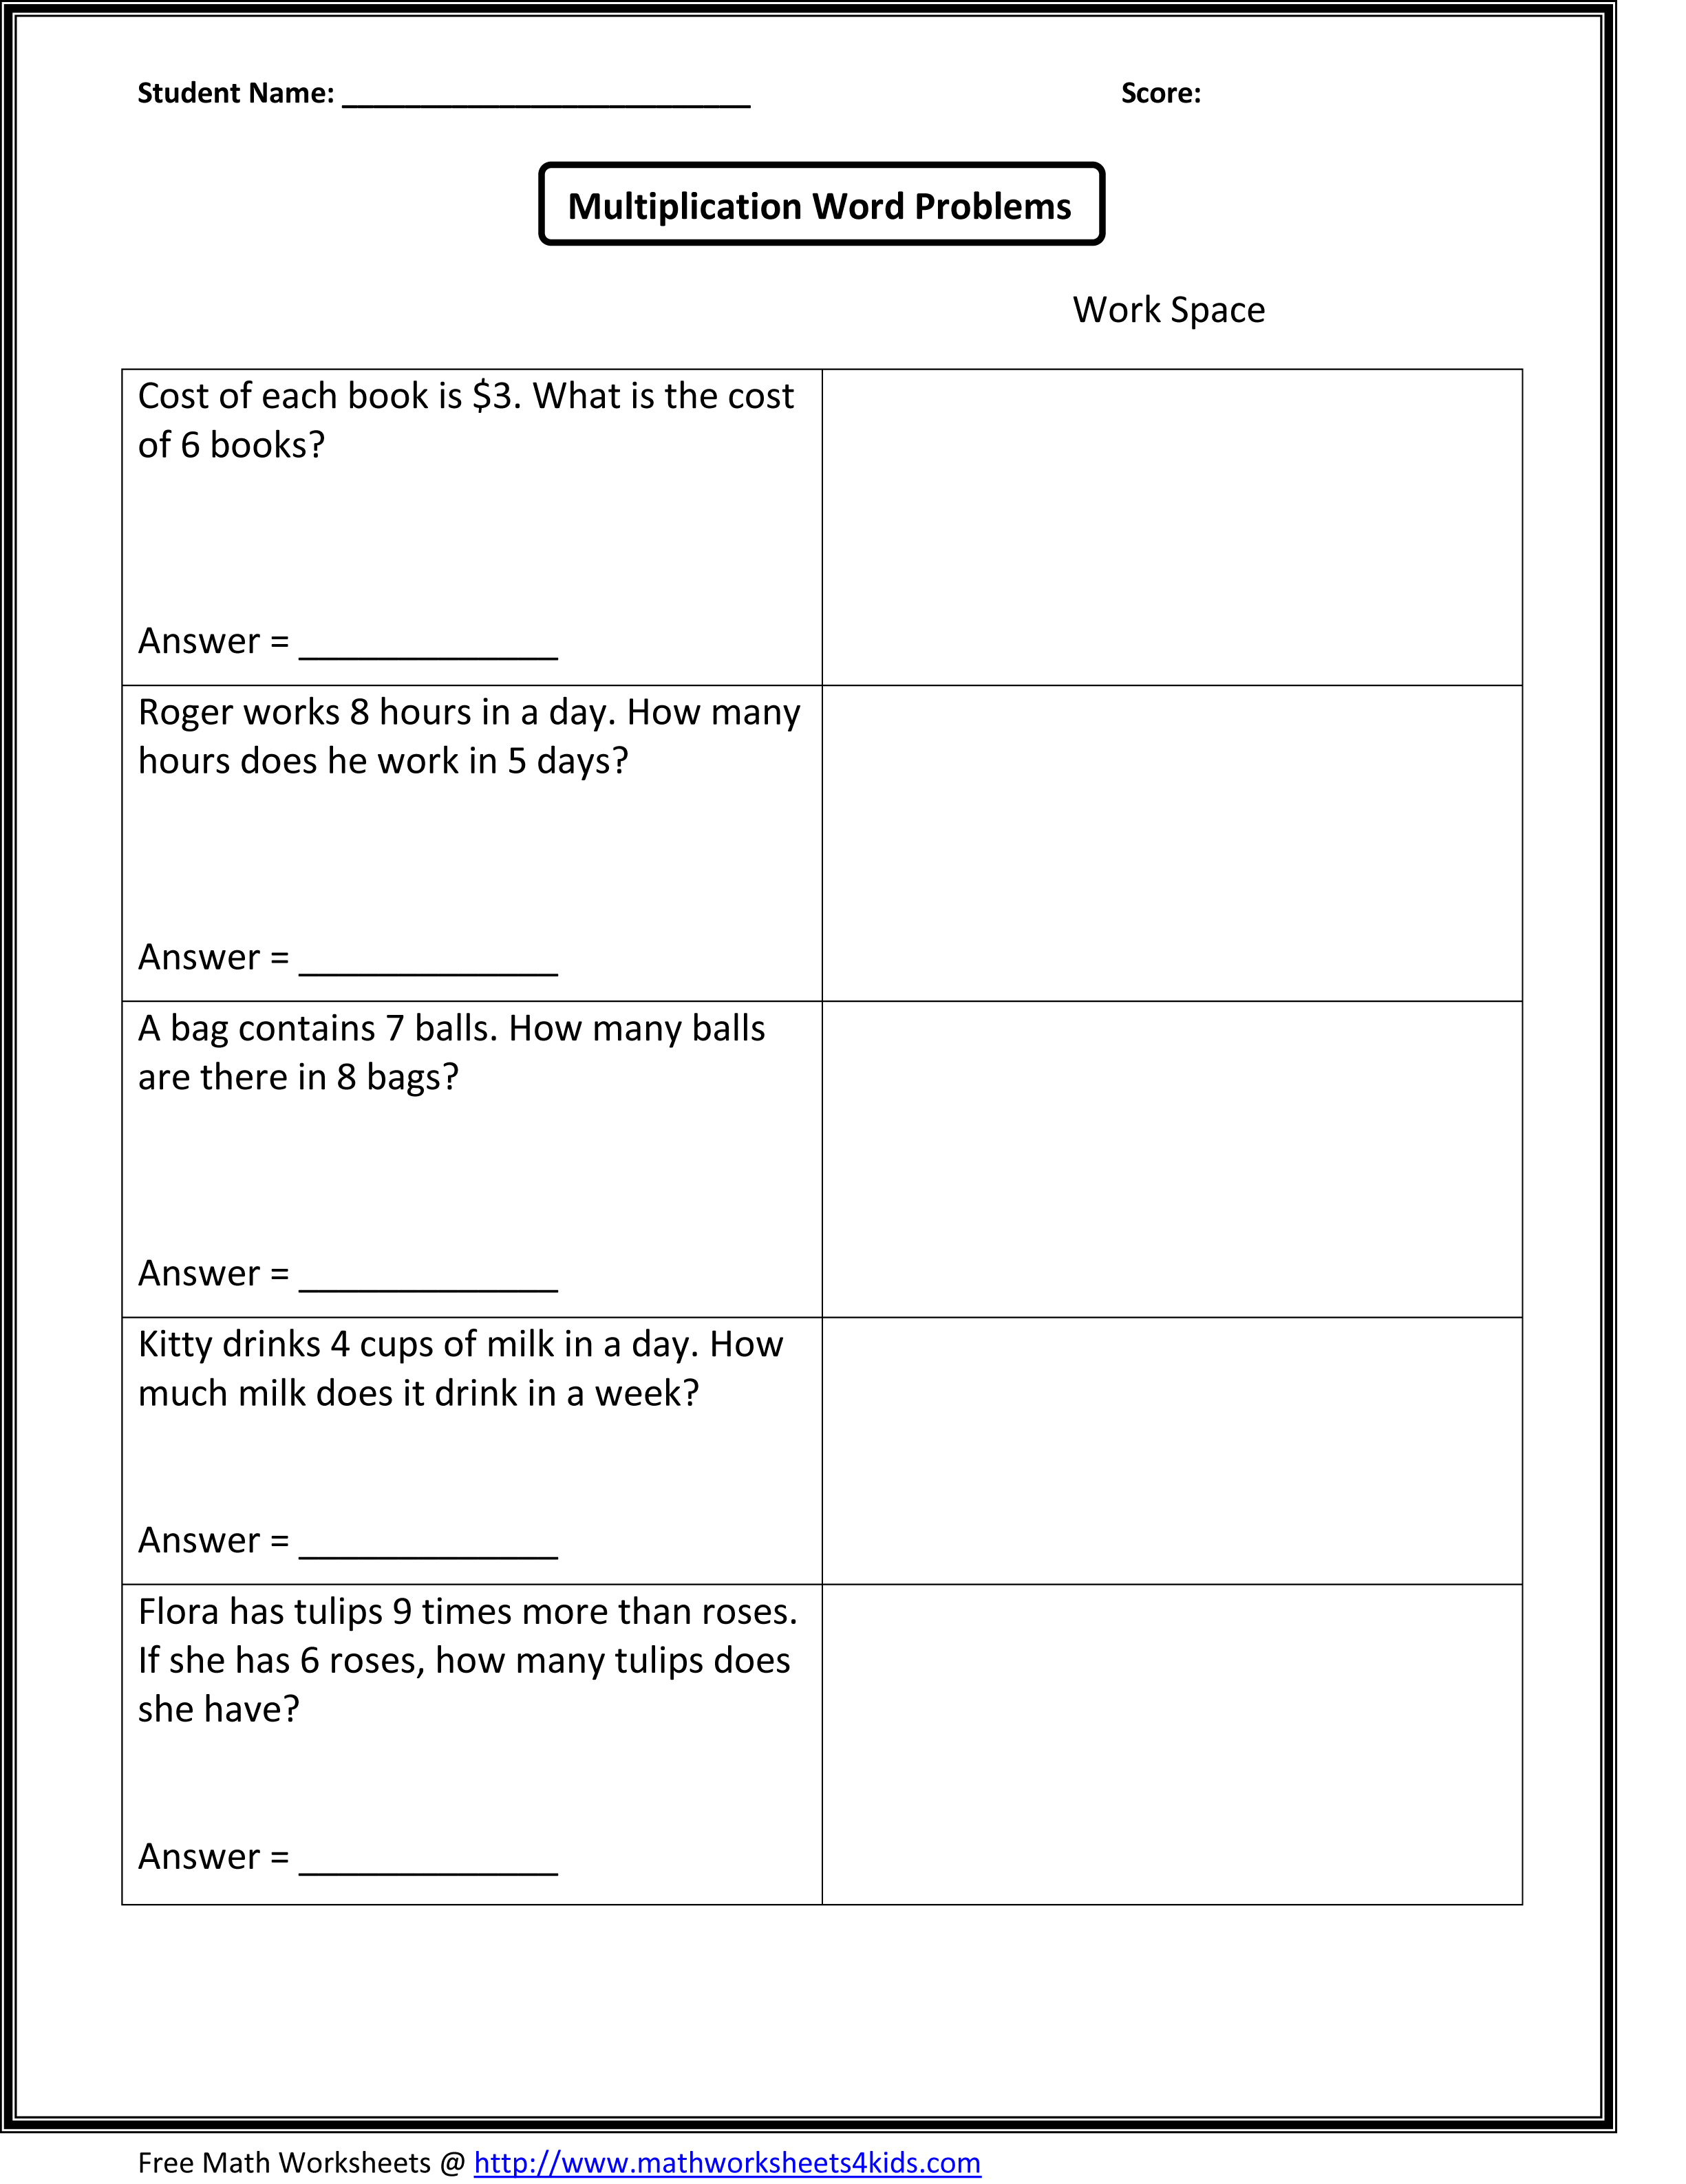 4th-grade-word-problems-multiplication-worksheets-edumonitor